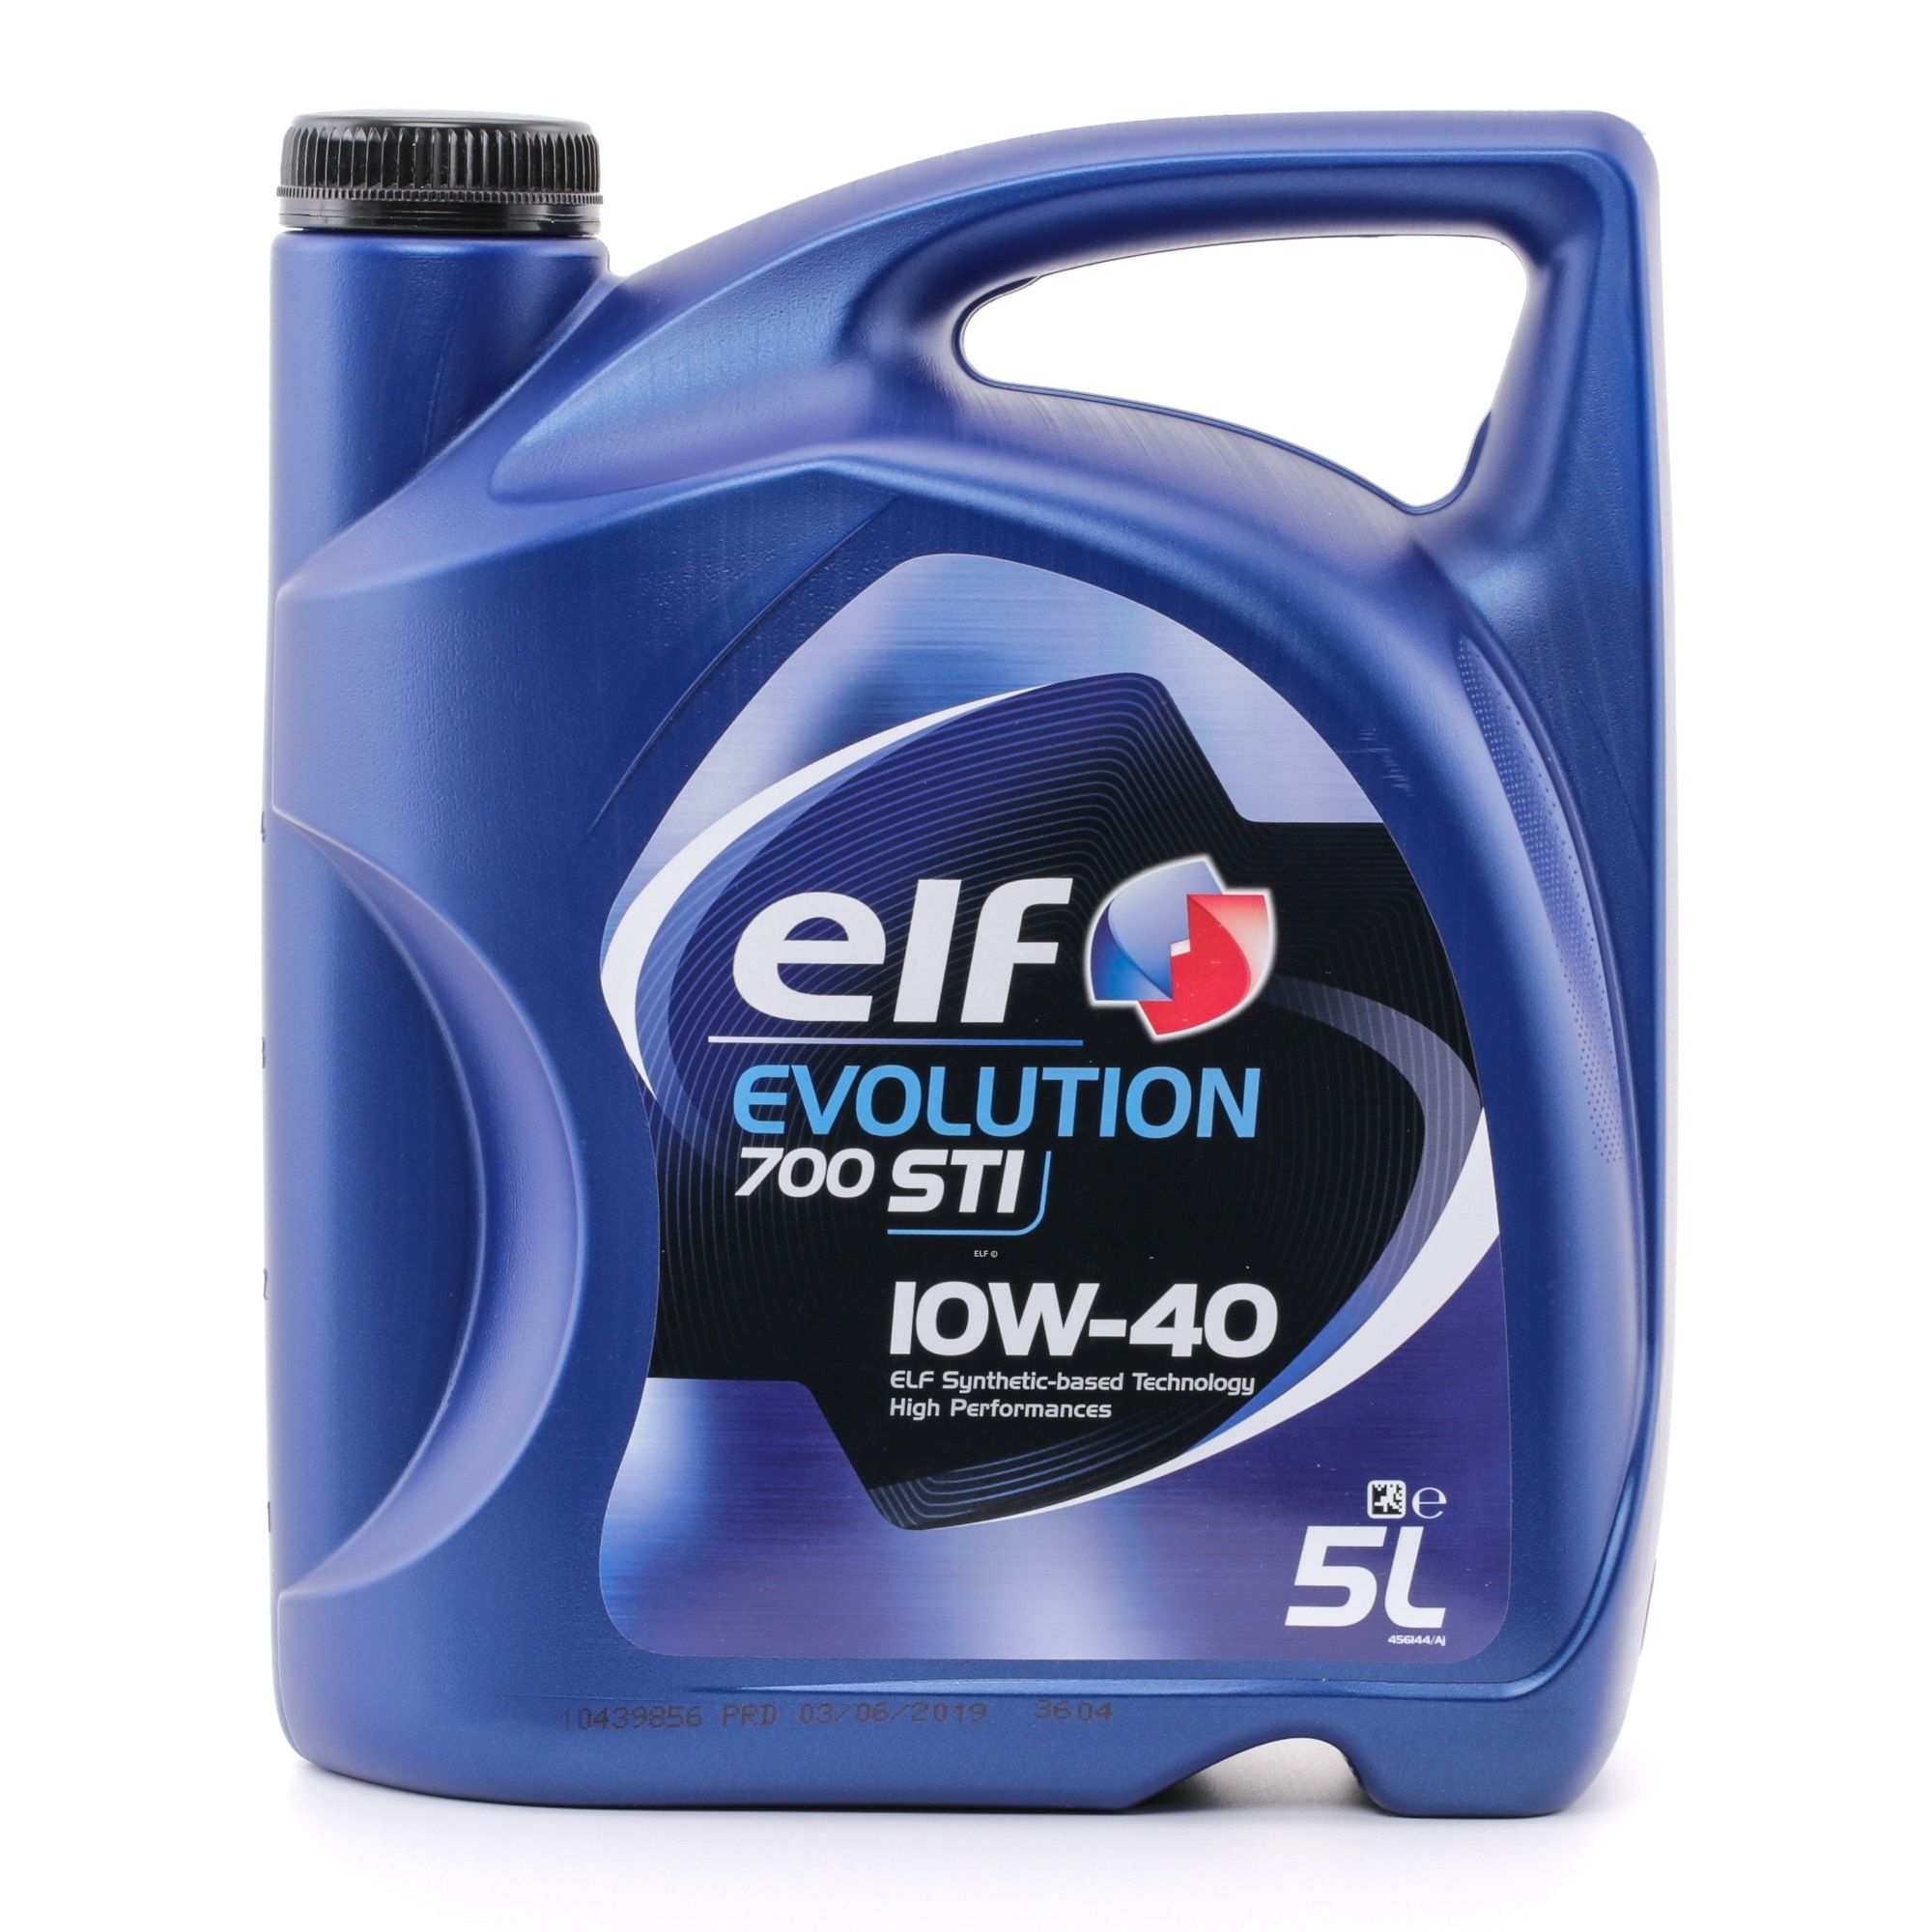 Motorový olej ELF Evolution, 700 STI 2202840 10W40, 5l